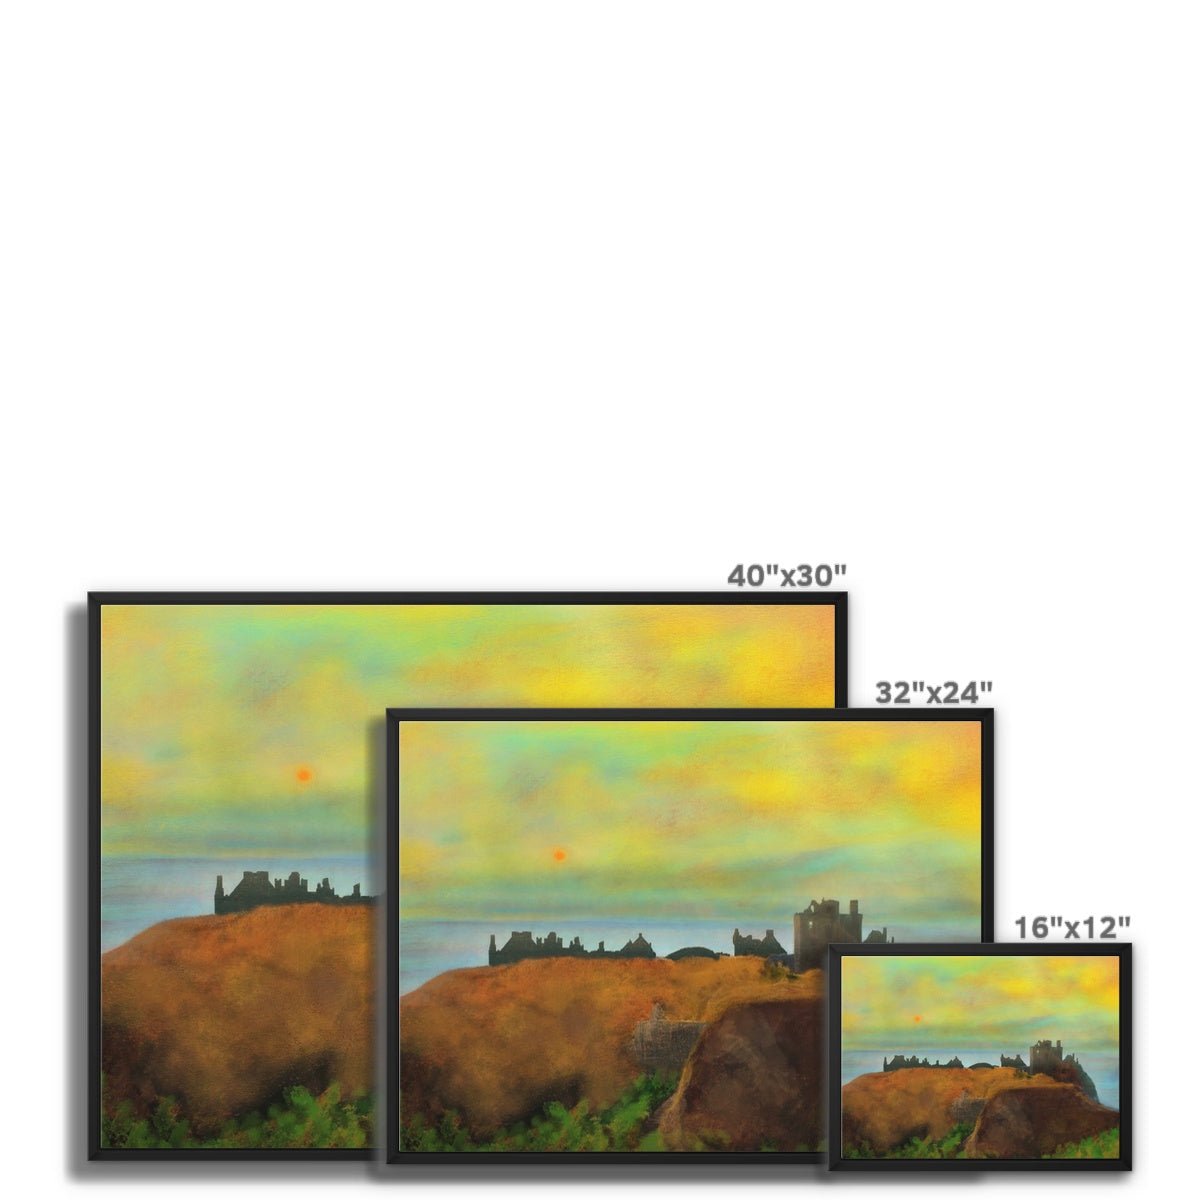 Dunnottar Castle Dusk Painting | Framed Canvas From Scotland-Floating Framed Canvas Prints-Scottish Castles Art Gallery-Paintings, Prints, Homeware, Art Gifts From Scotland By Scottish Artist Kevin Hunter